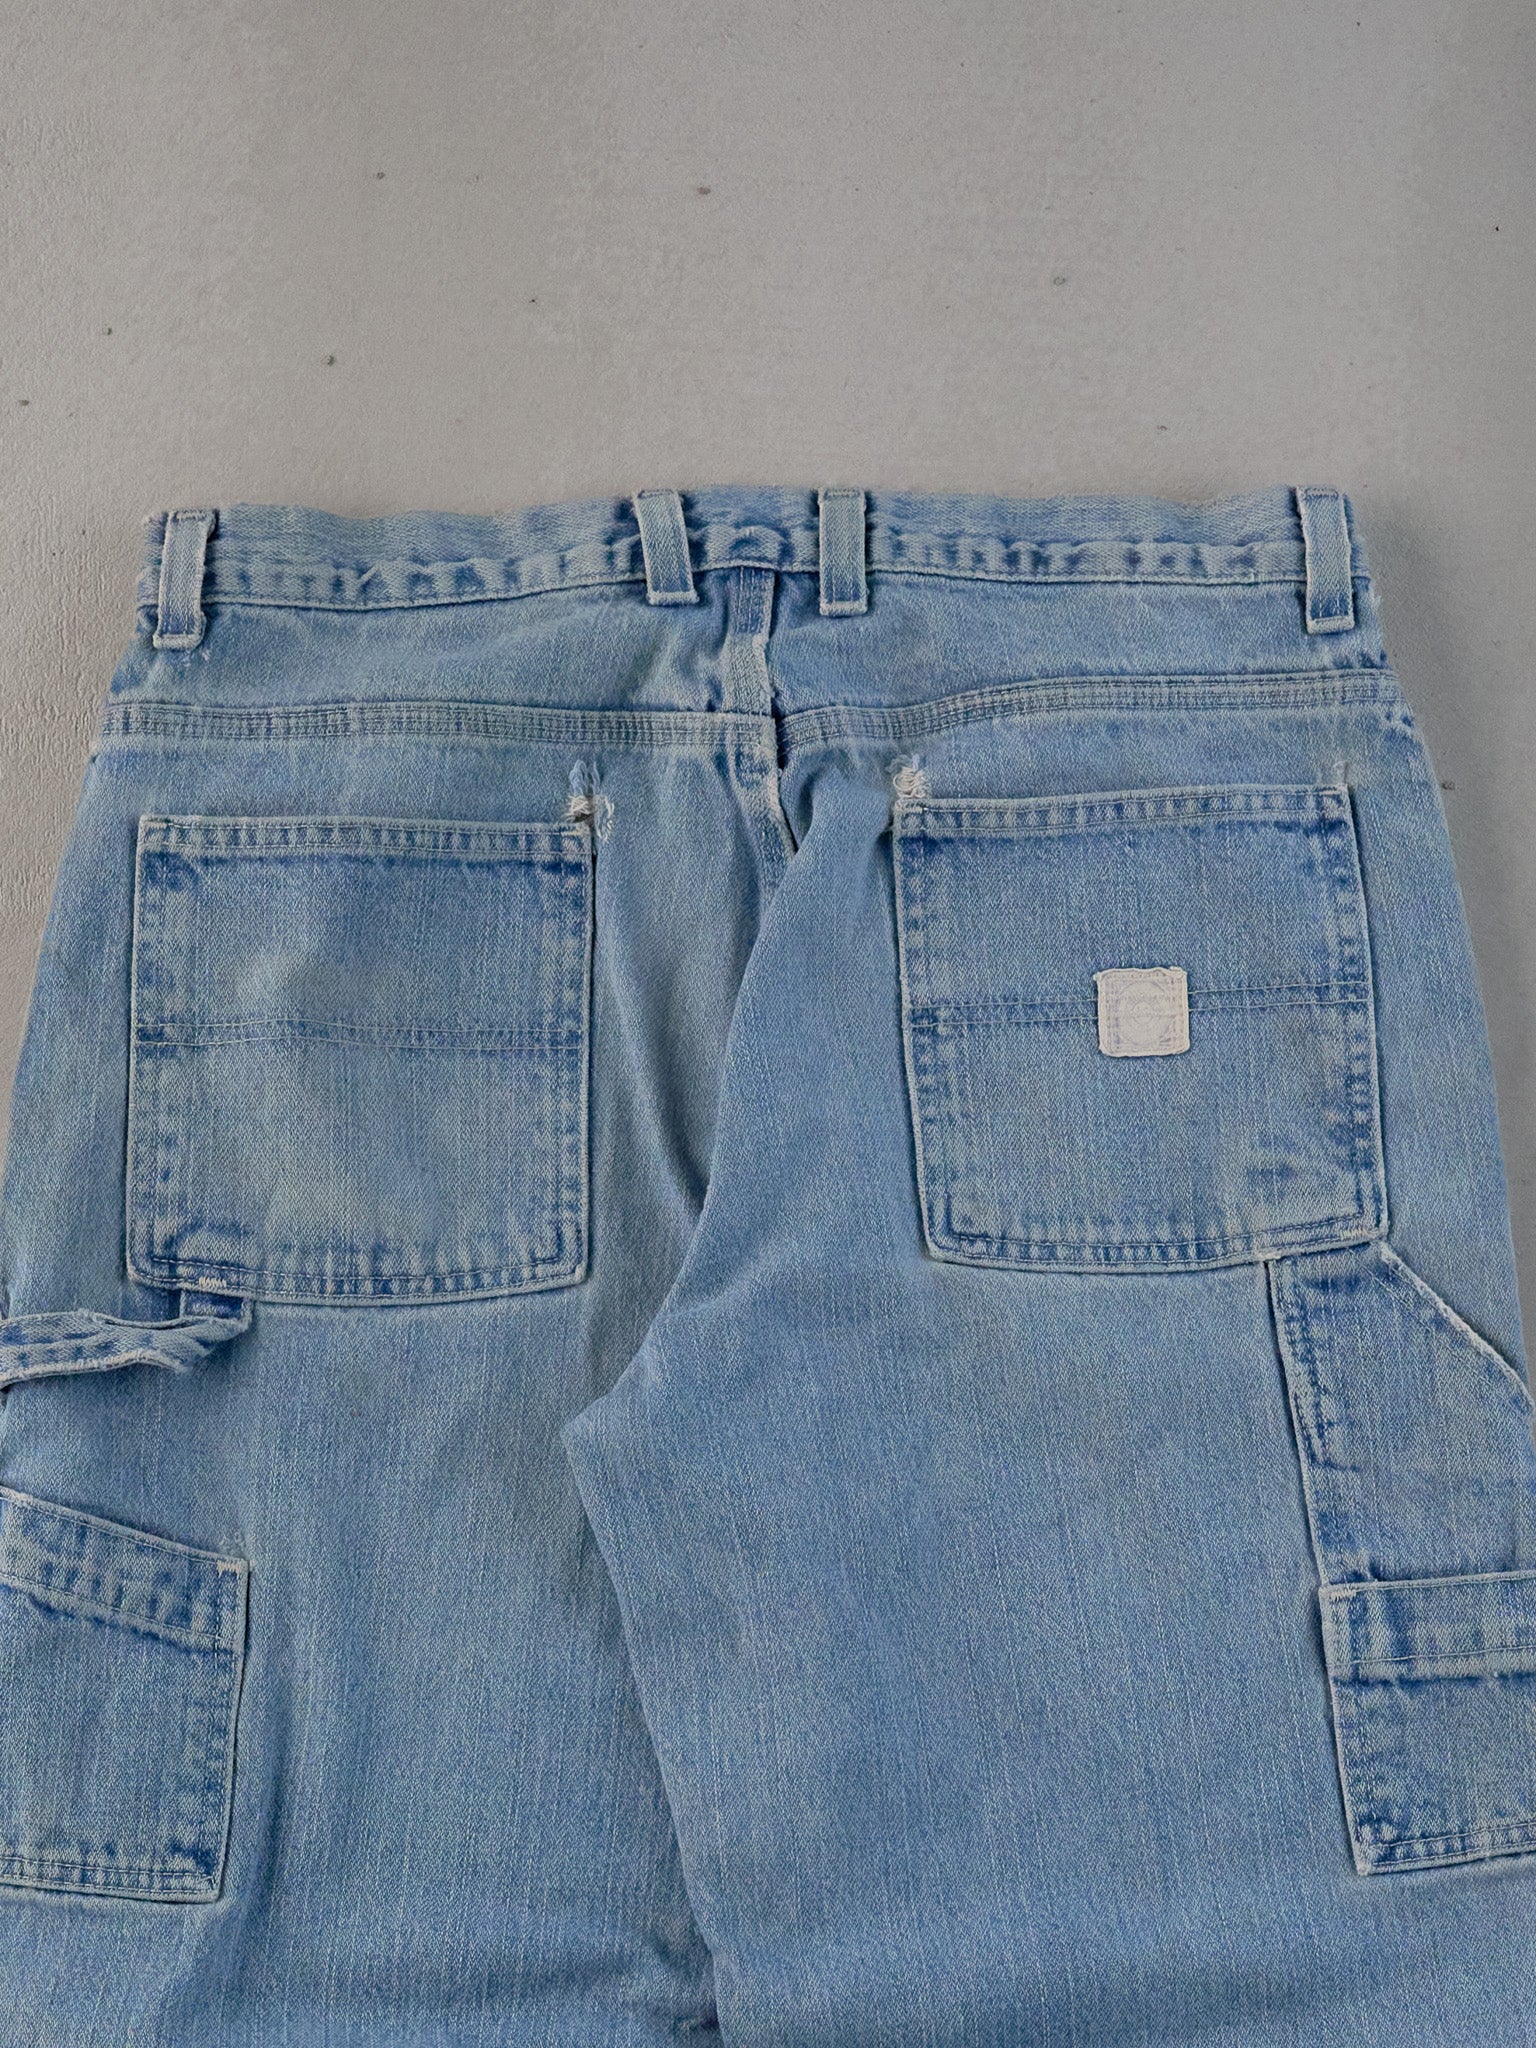 Vintage 90s Light Blue Workwear Carpenter Pants (32x32)